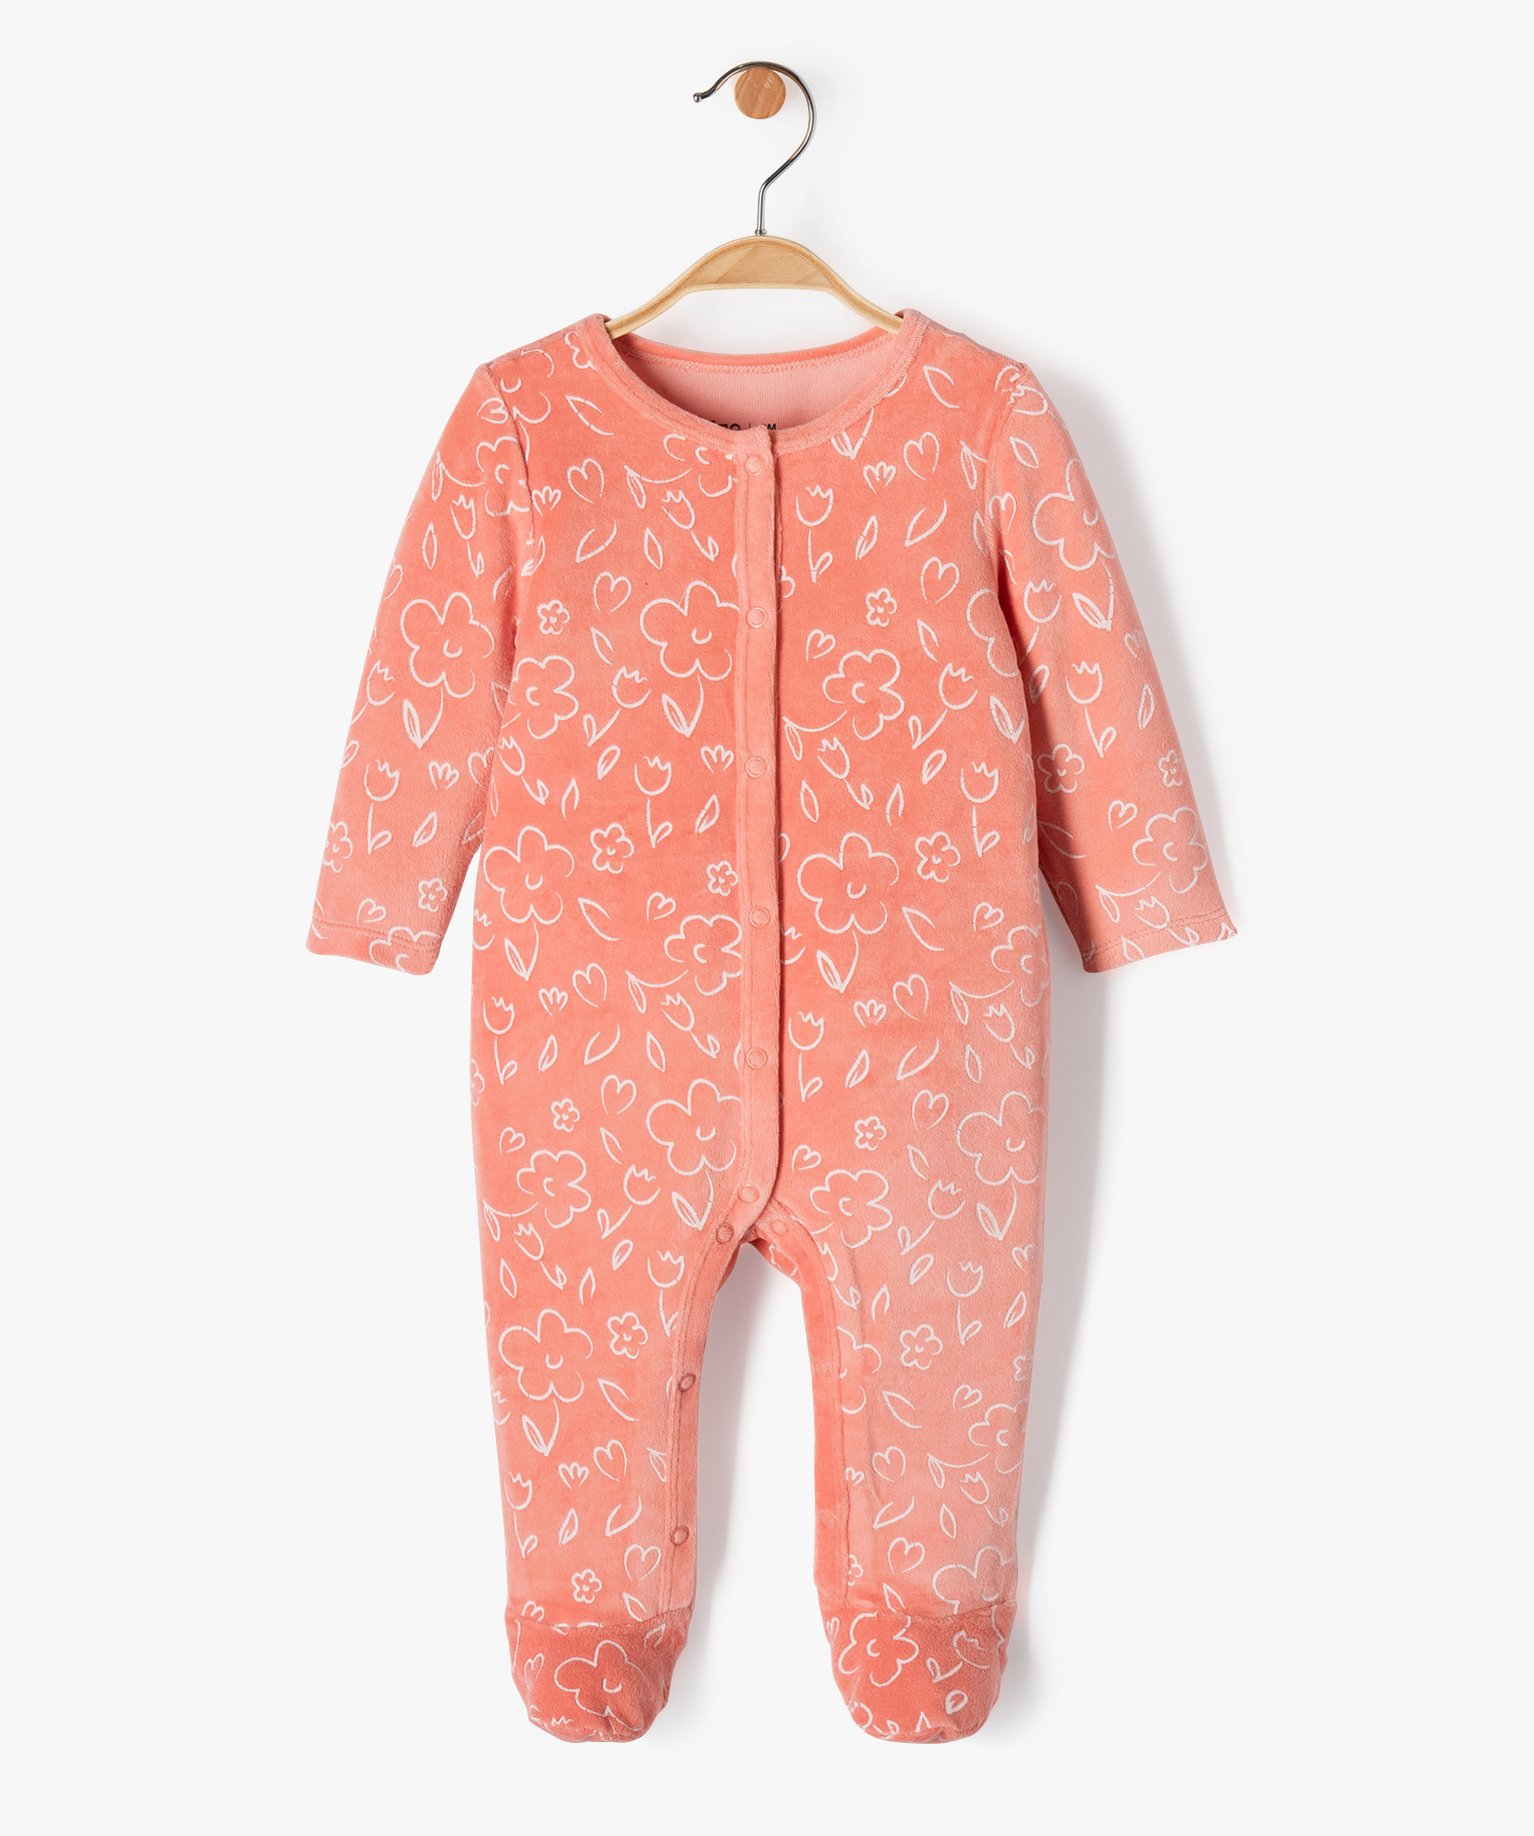 pyjama bebe fille a motifs renards et petites fleurs rose